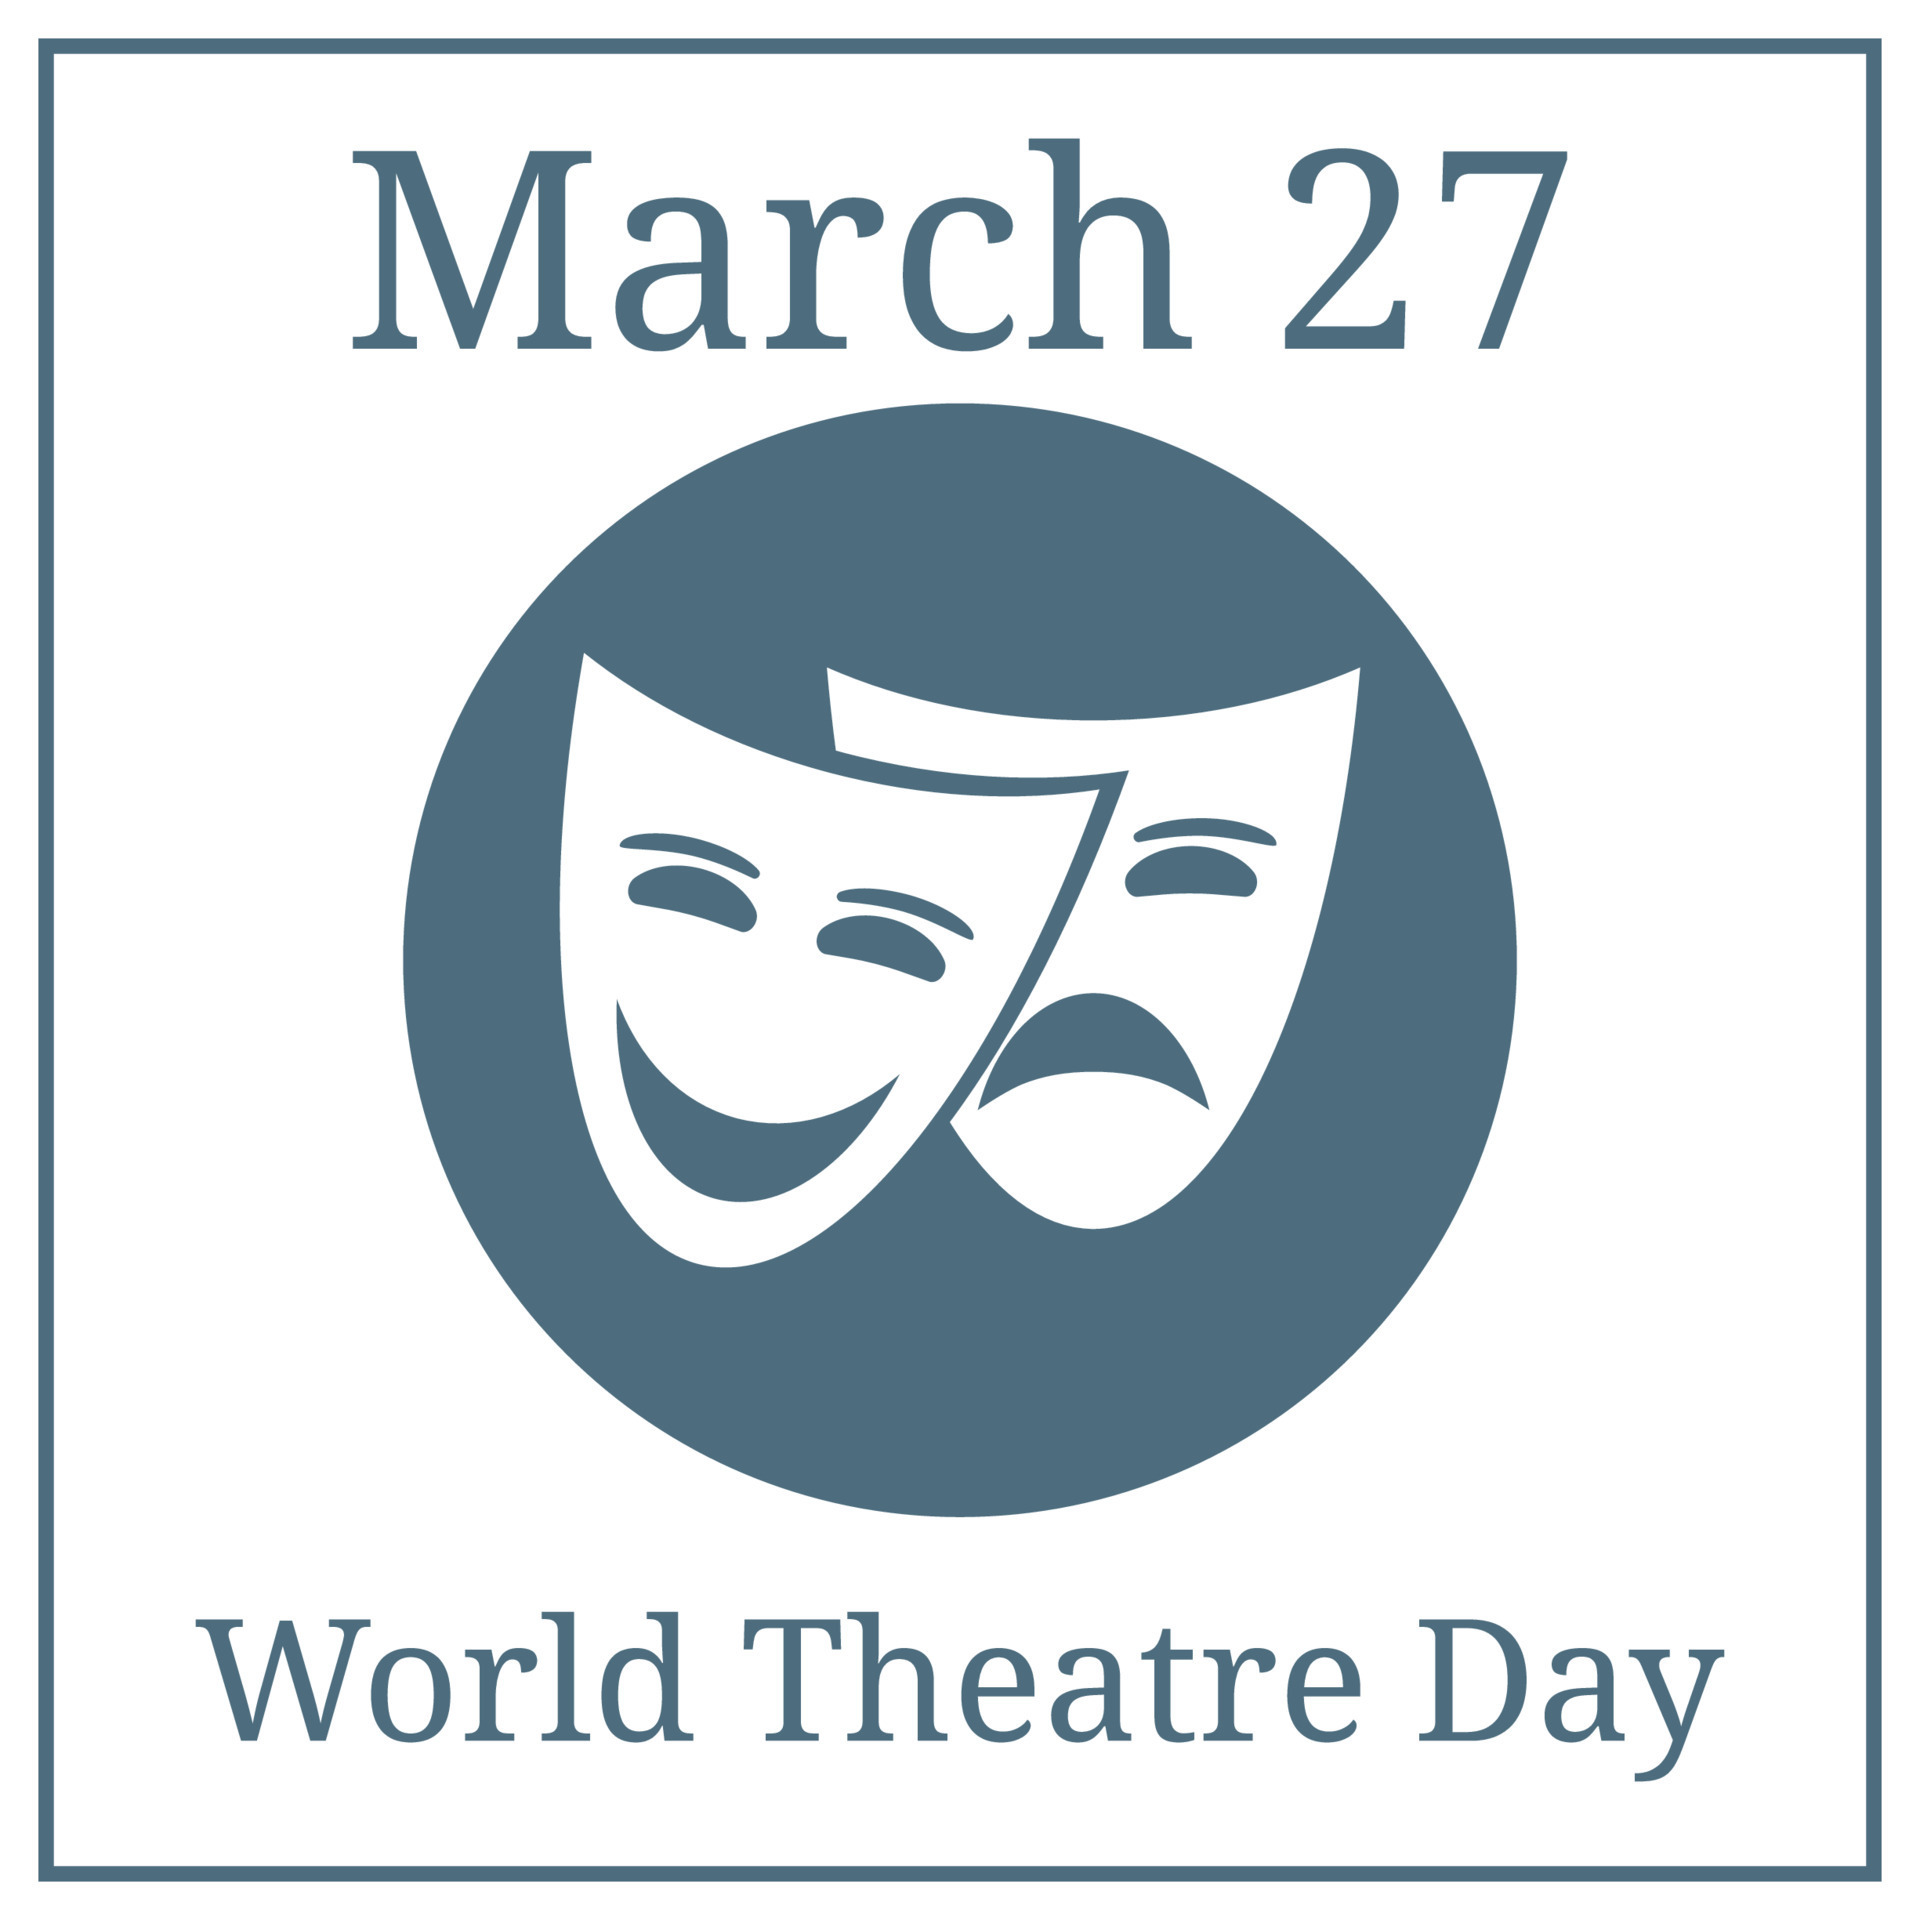 theatre logo masks